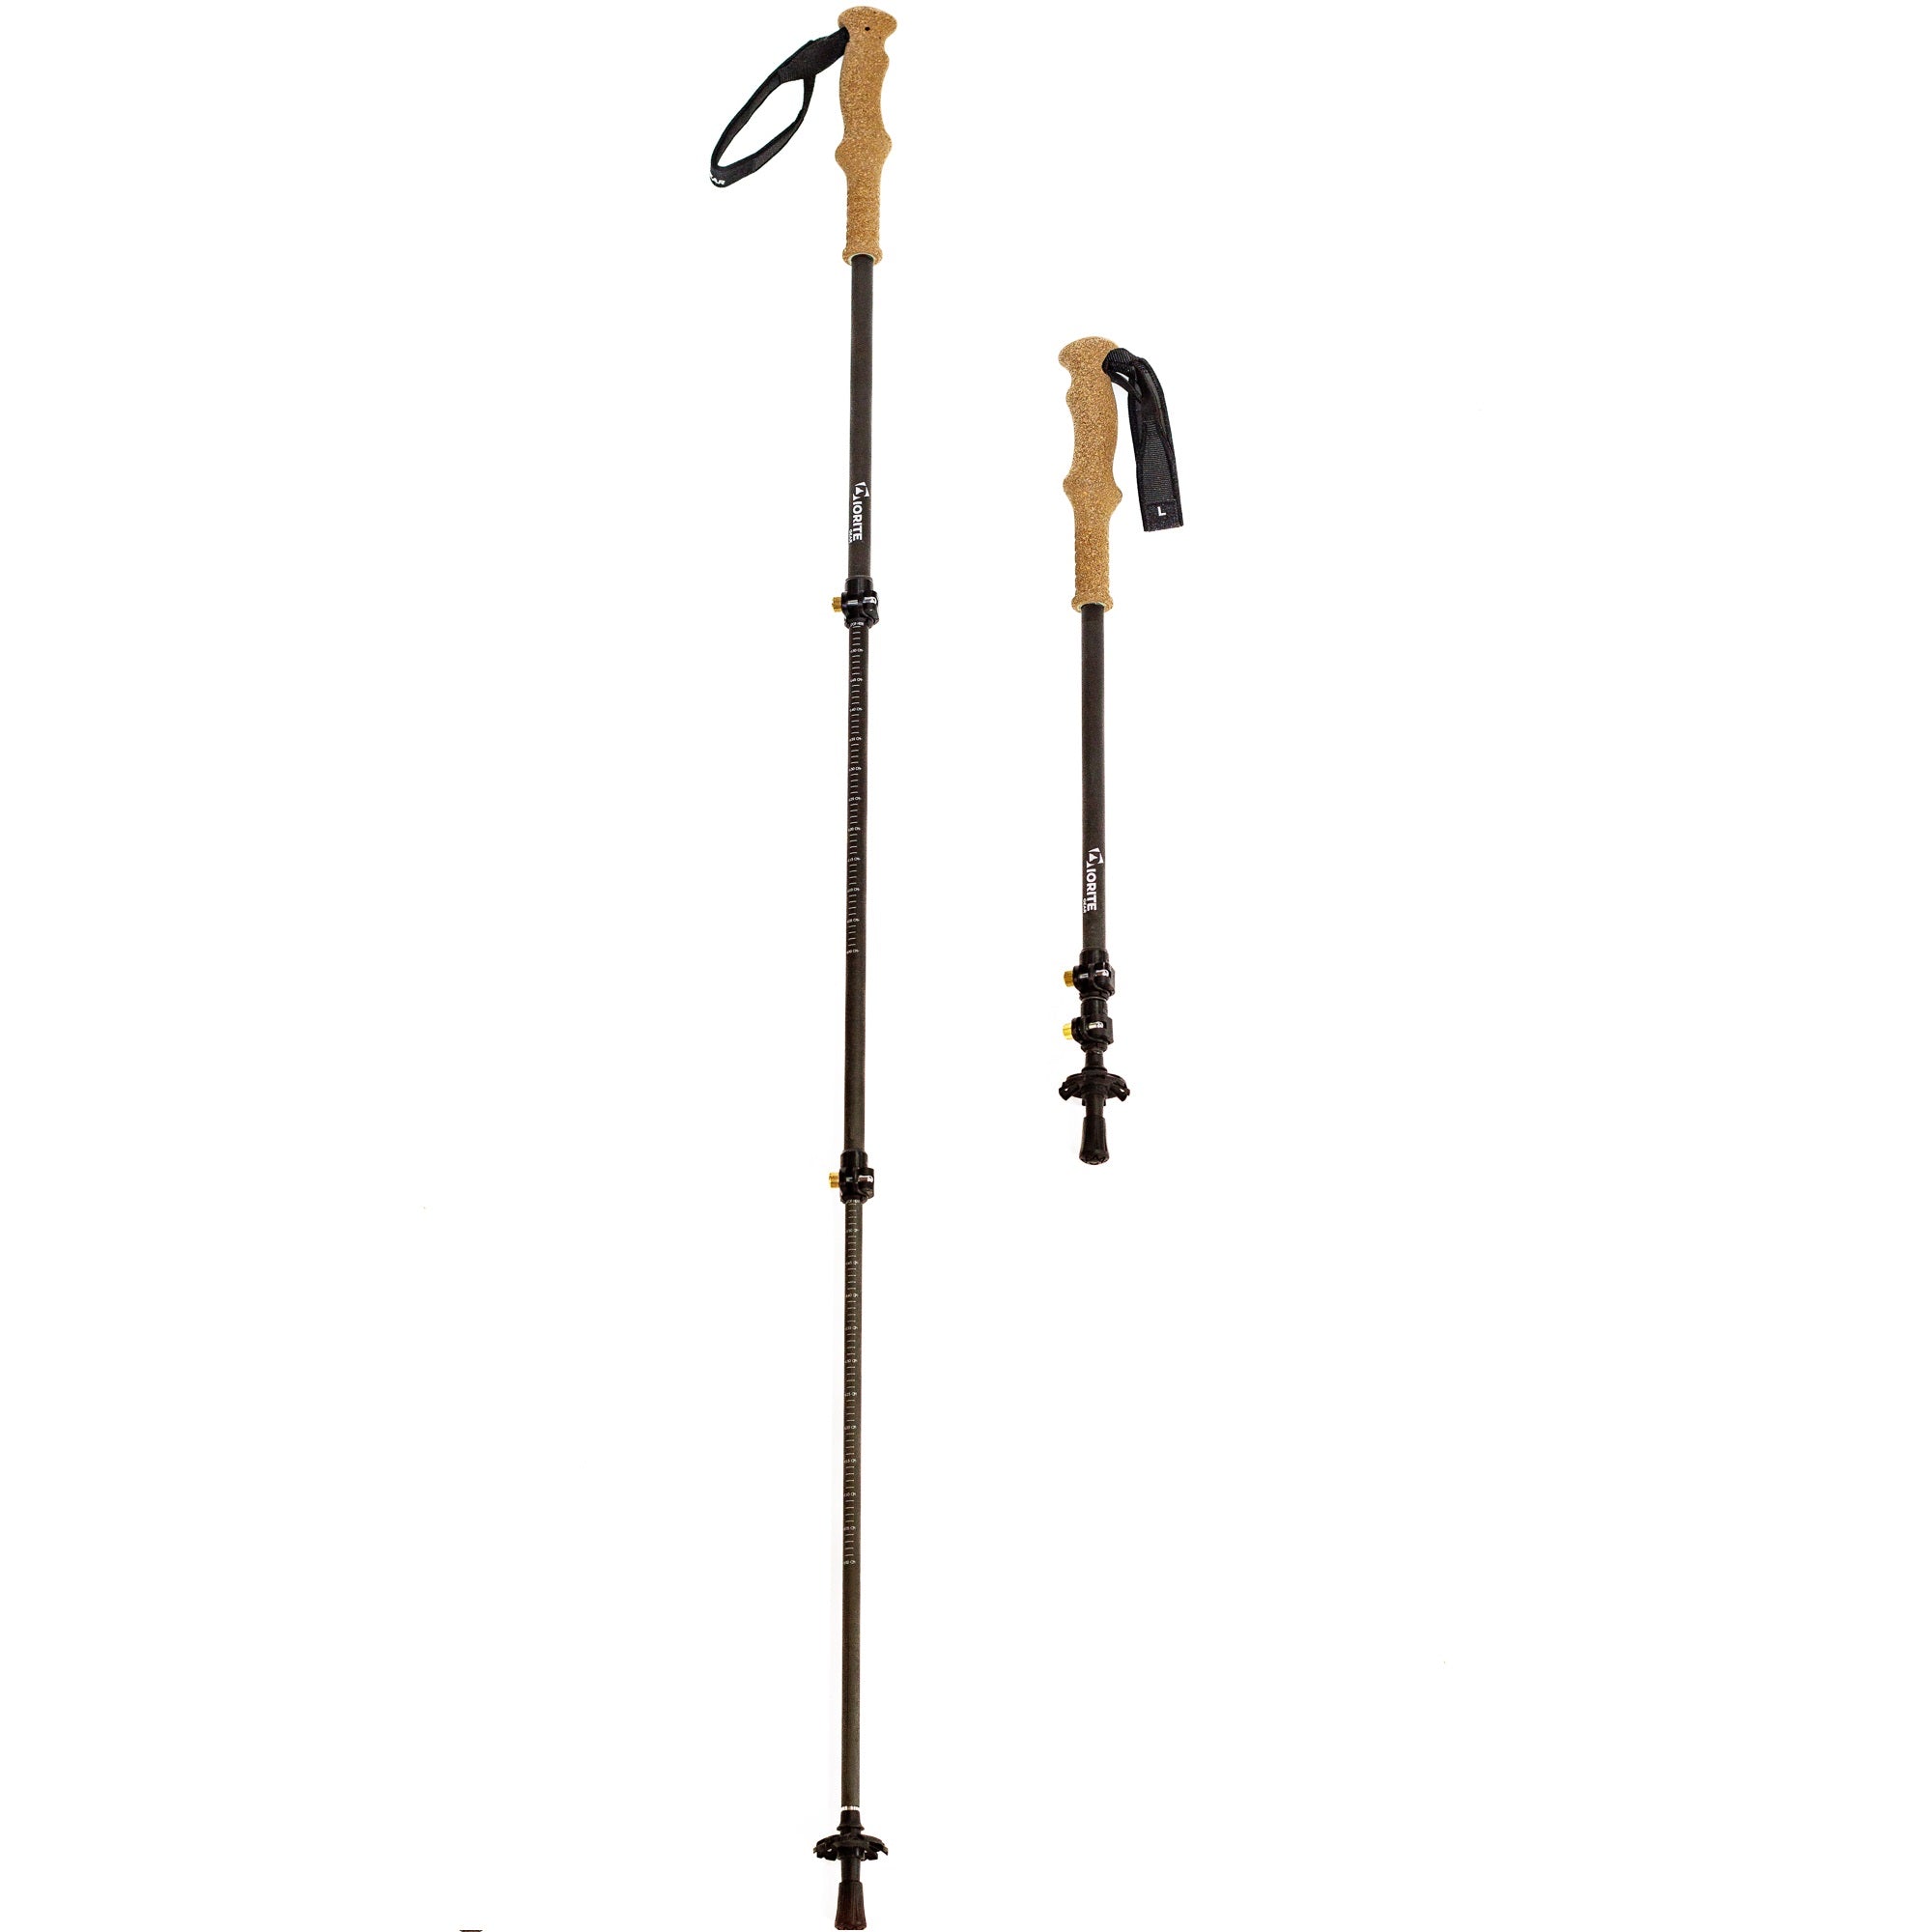 wonderpole, cane pole, telescopic poles - Page 2